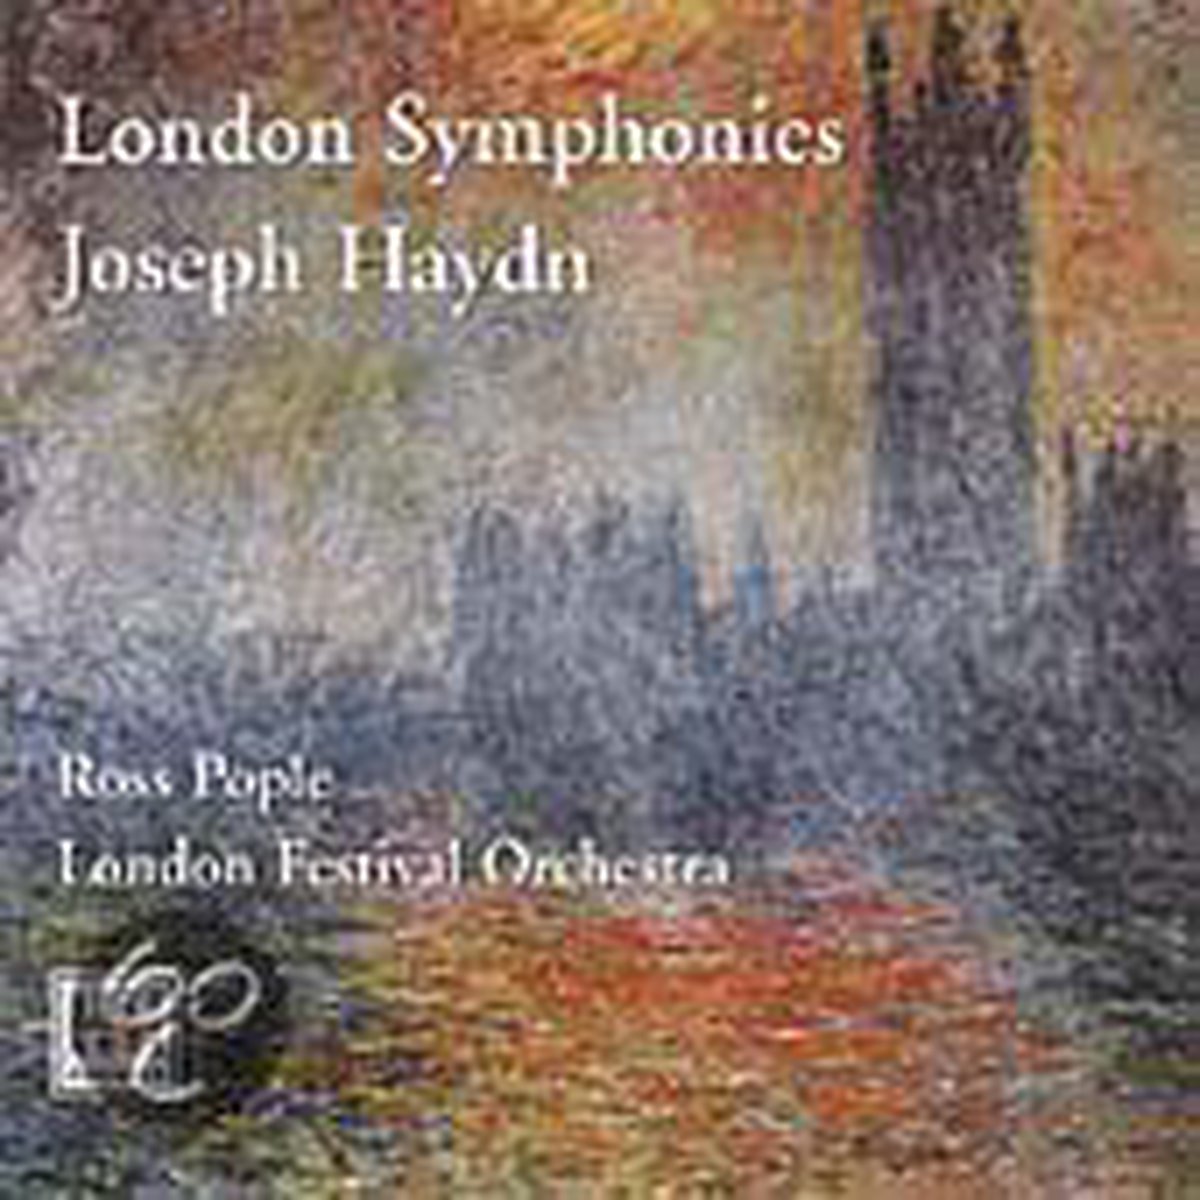 Haydn: London Symphonies / Ross Pople, London Festival Orchestra - Franz Joseph Haydn